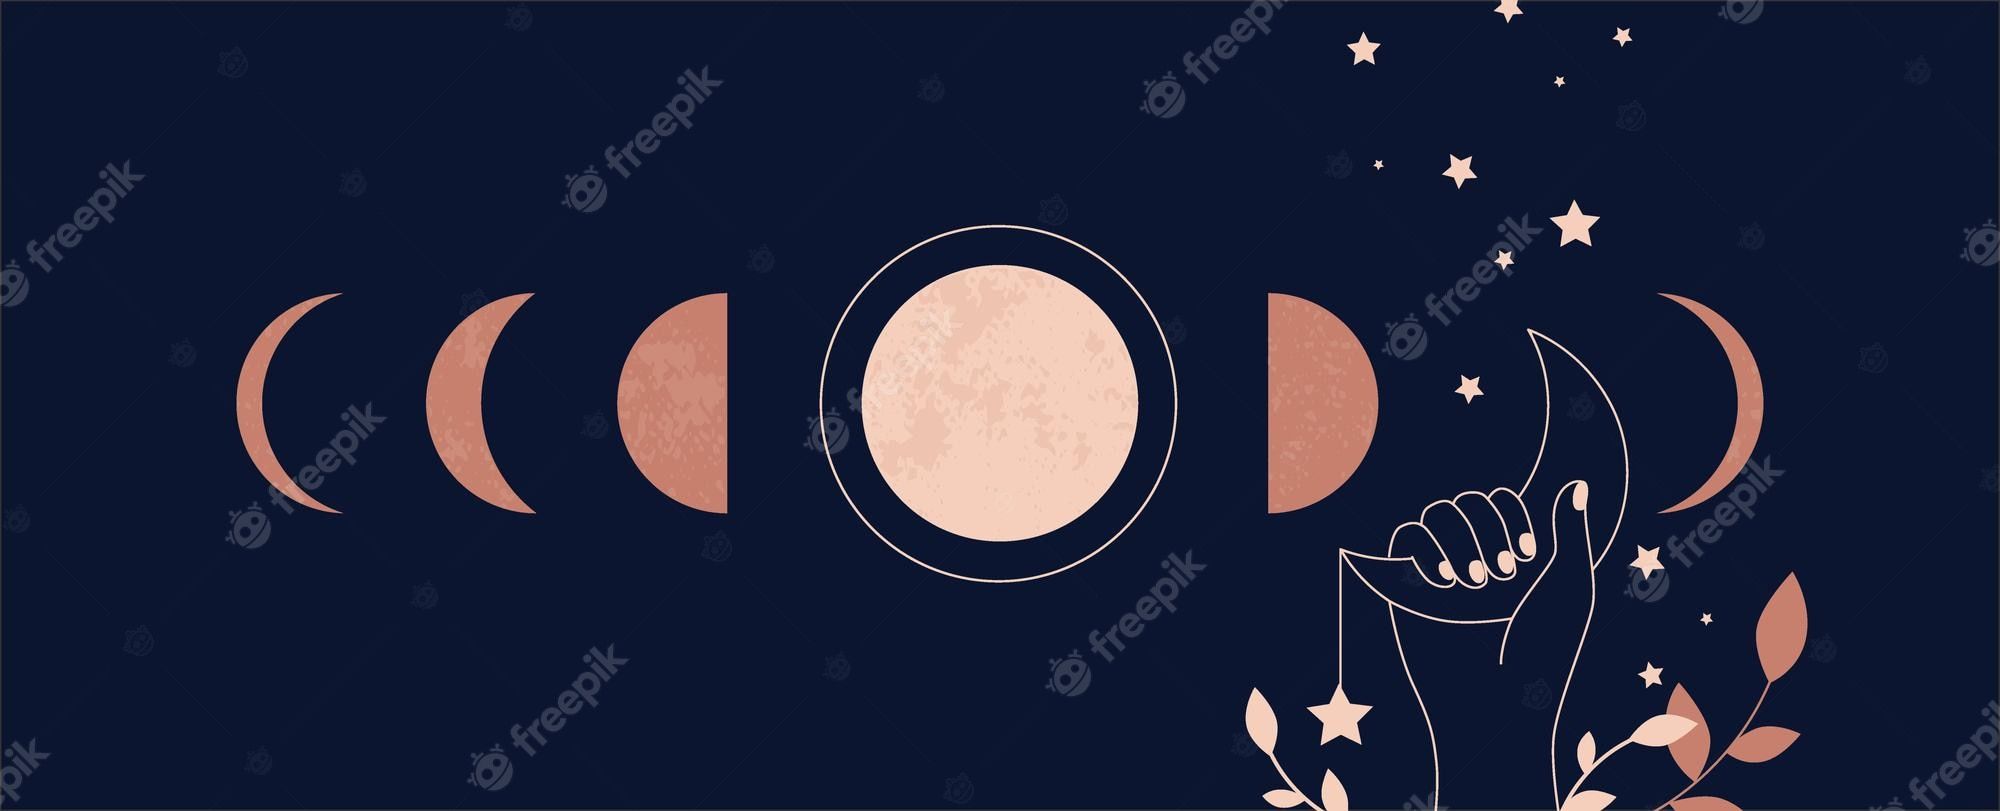 Moon Phases Art Image